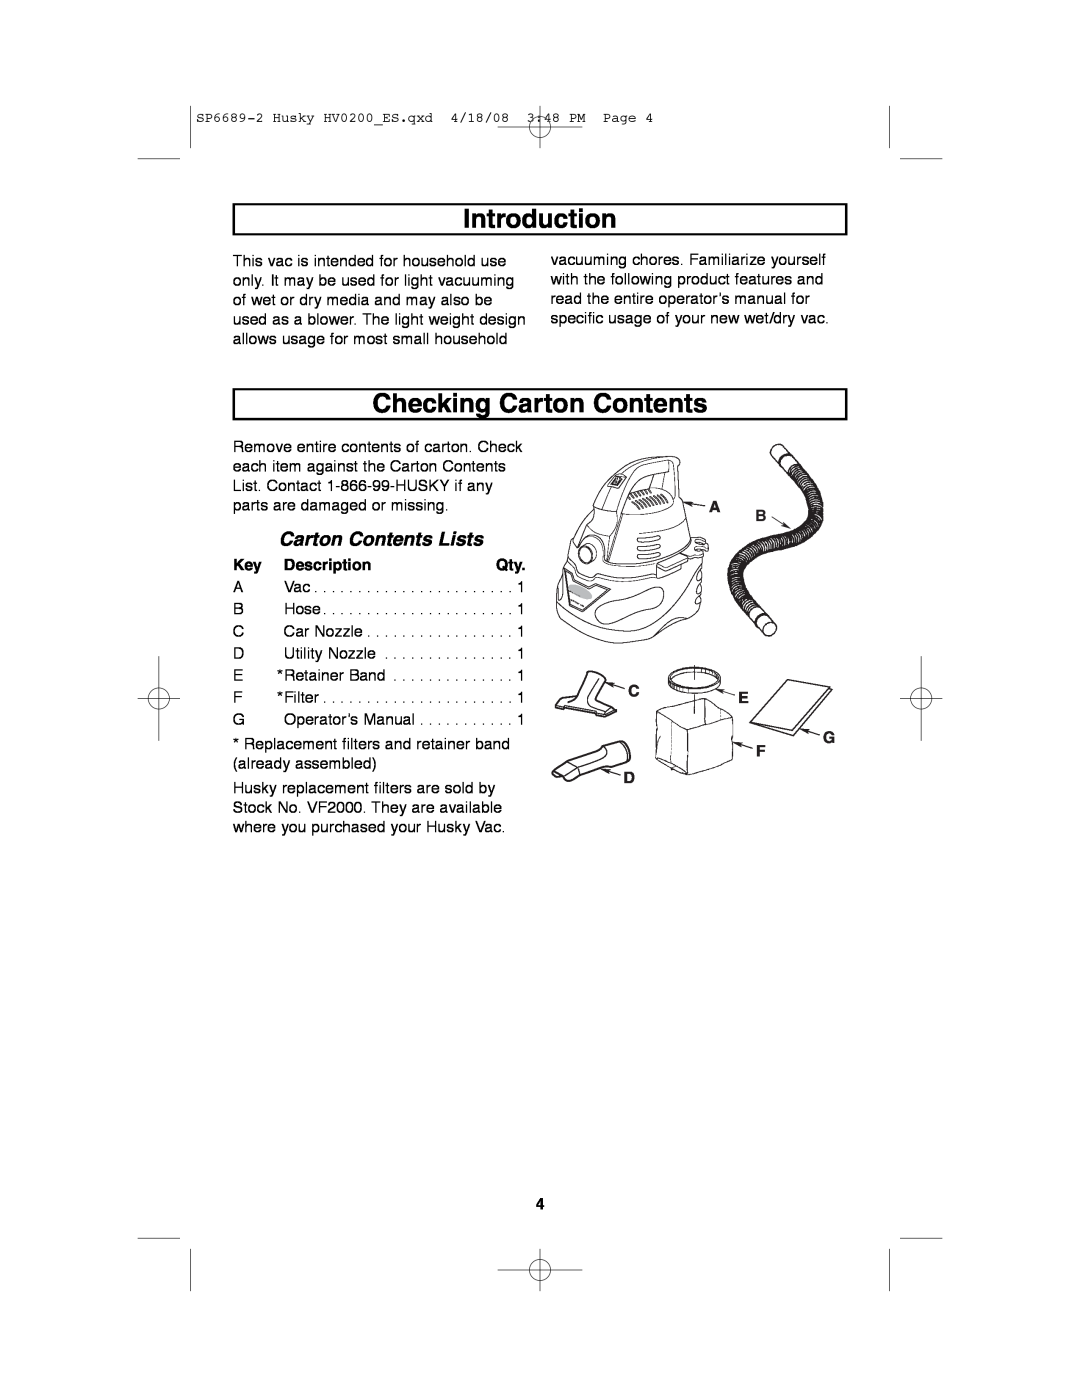 Husky HV02000 manual Introduction, Checking Carton Contents, Carton Contents Lists 